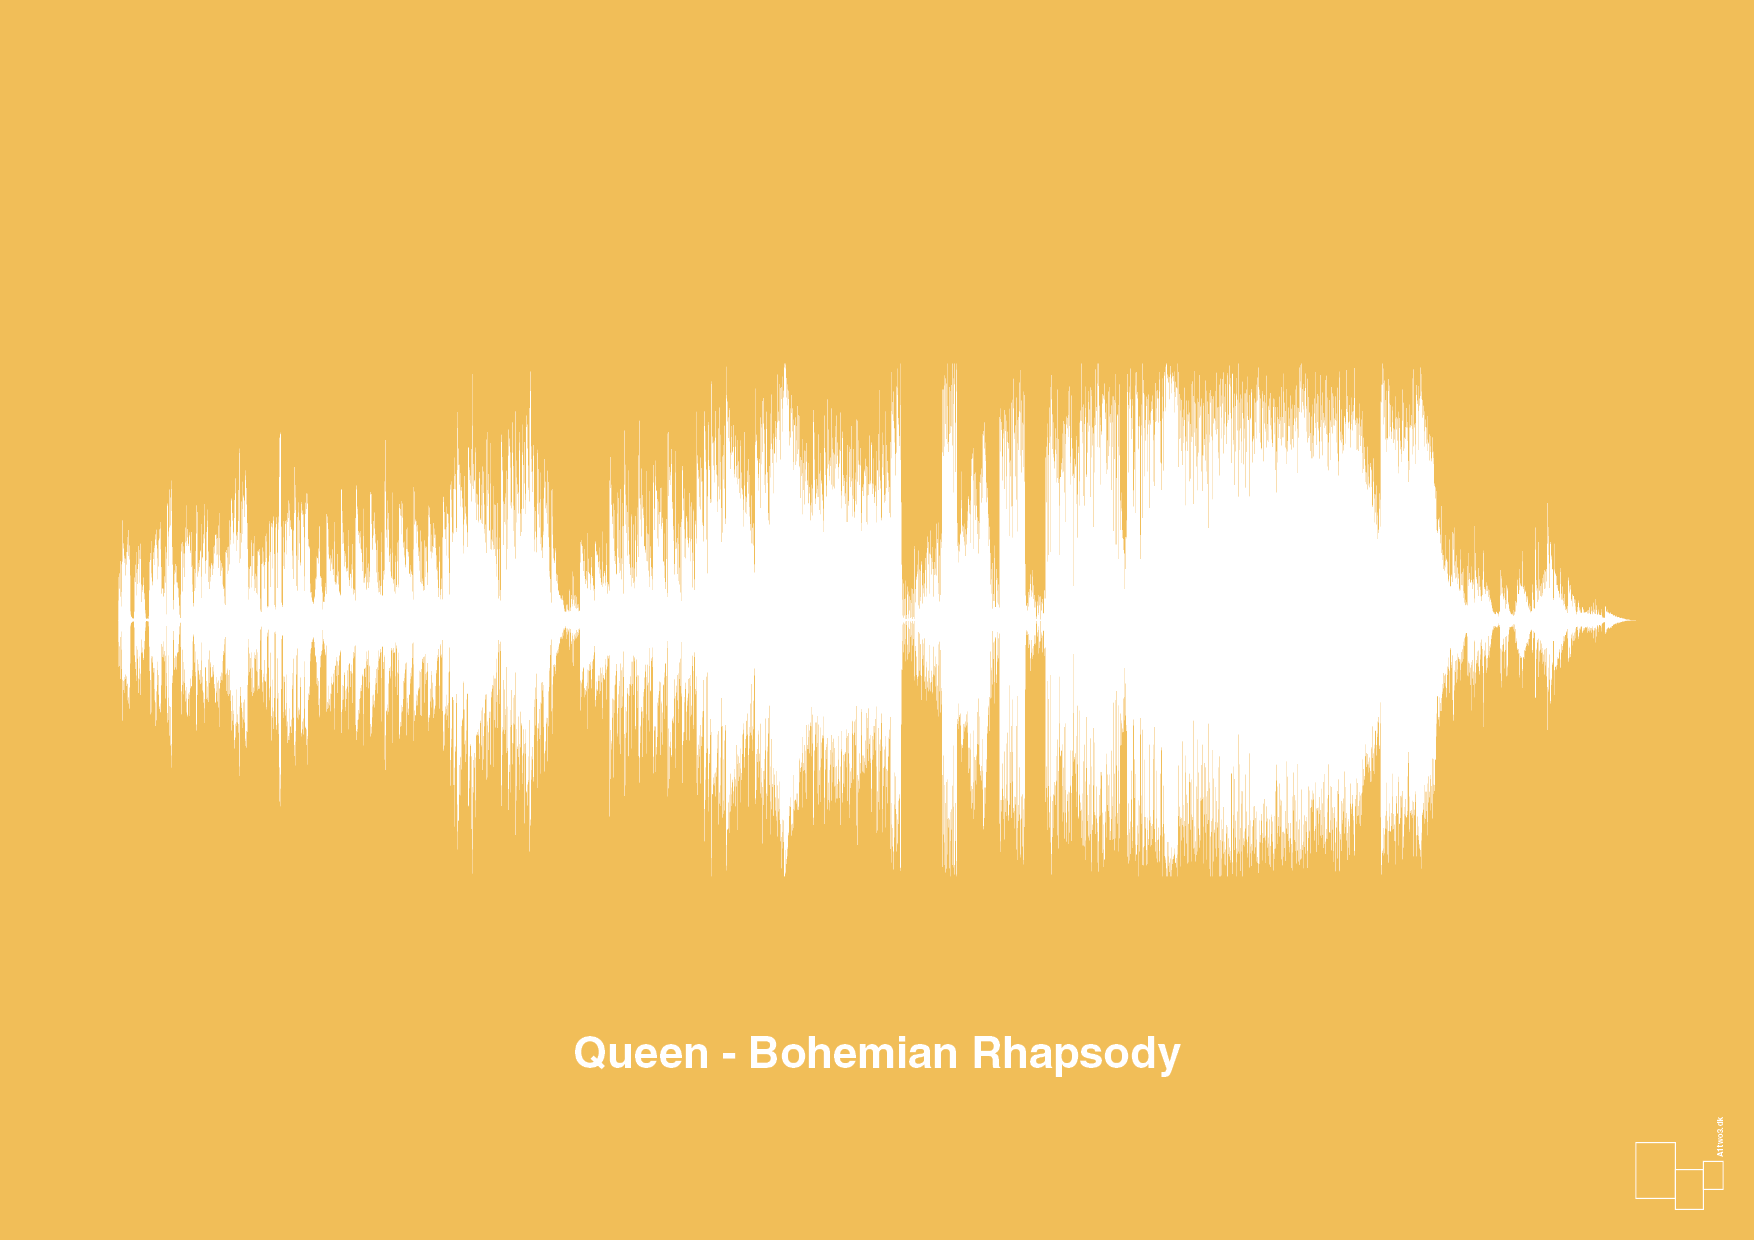 queen - bohemian rhapsody - Plakat med Musik i Honeycomb